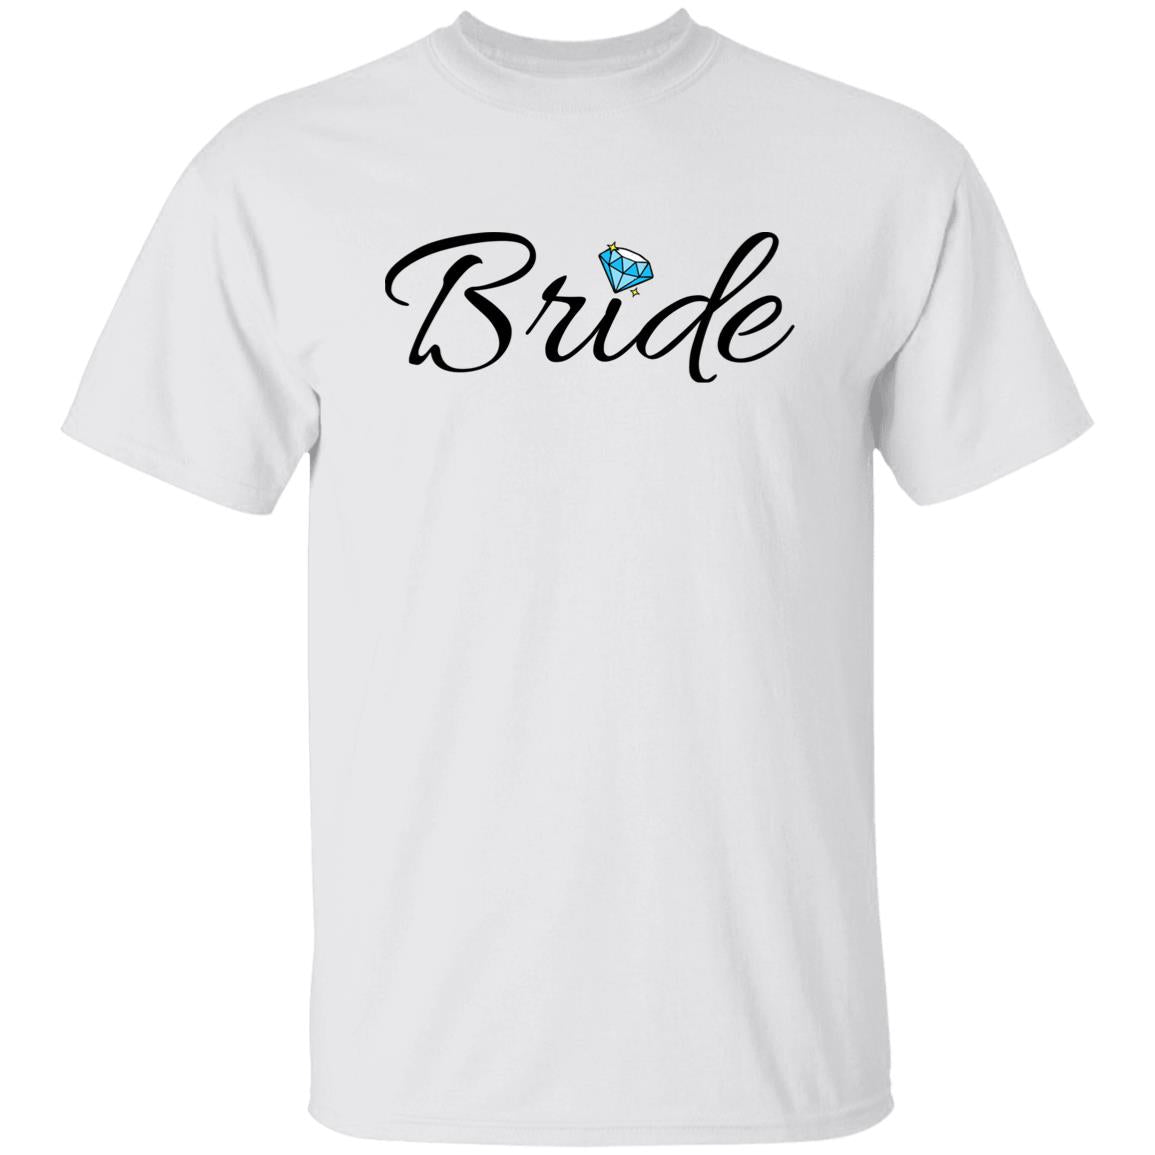 Bride (Black Print) G500 5.3 oz. T-Shirt